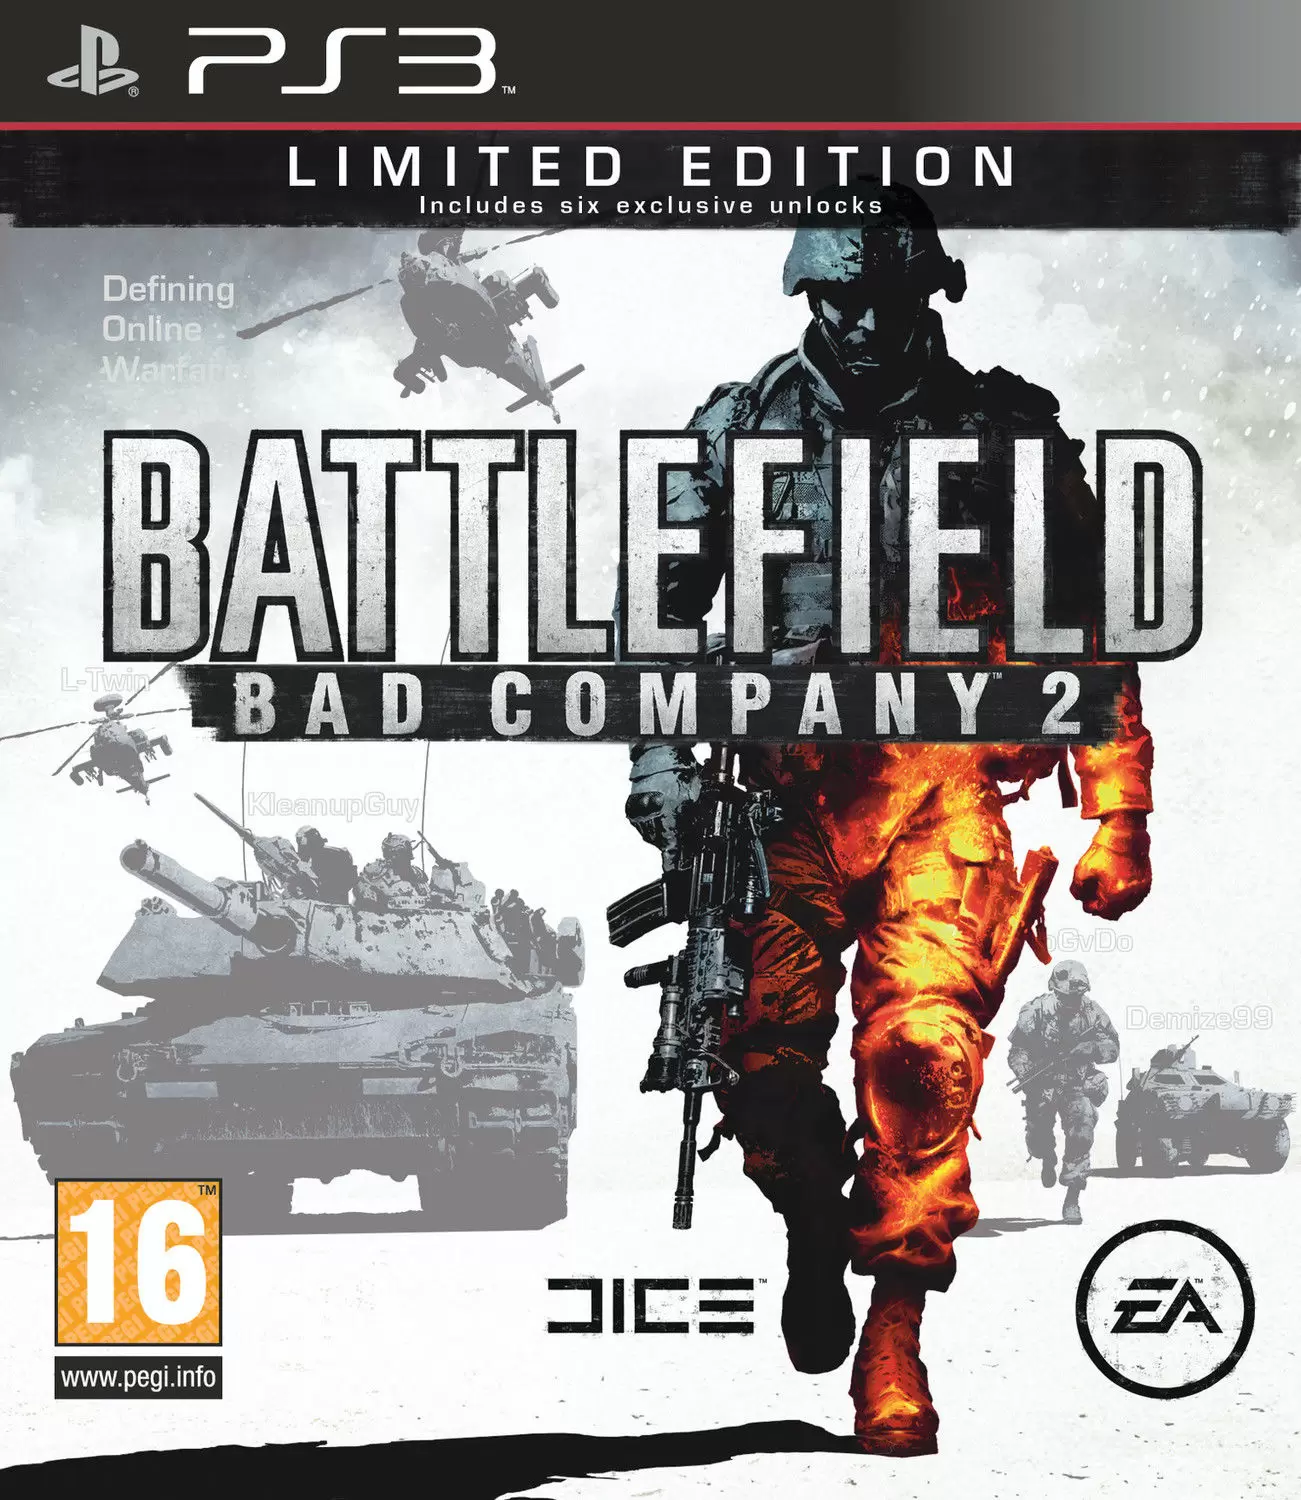 PS3 Games - Battlefield: Bad Company 2